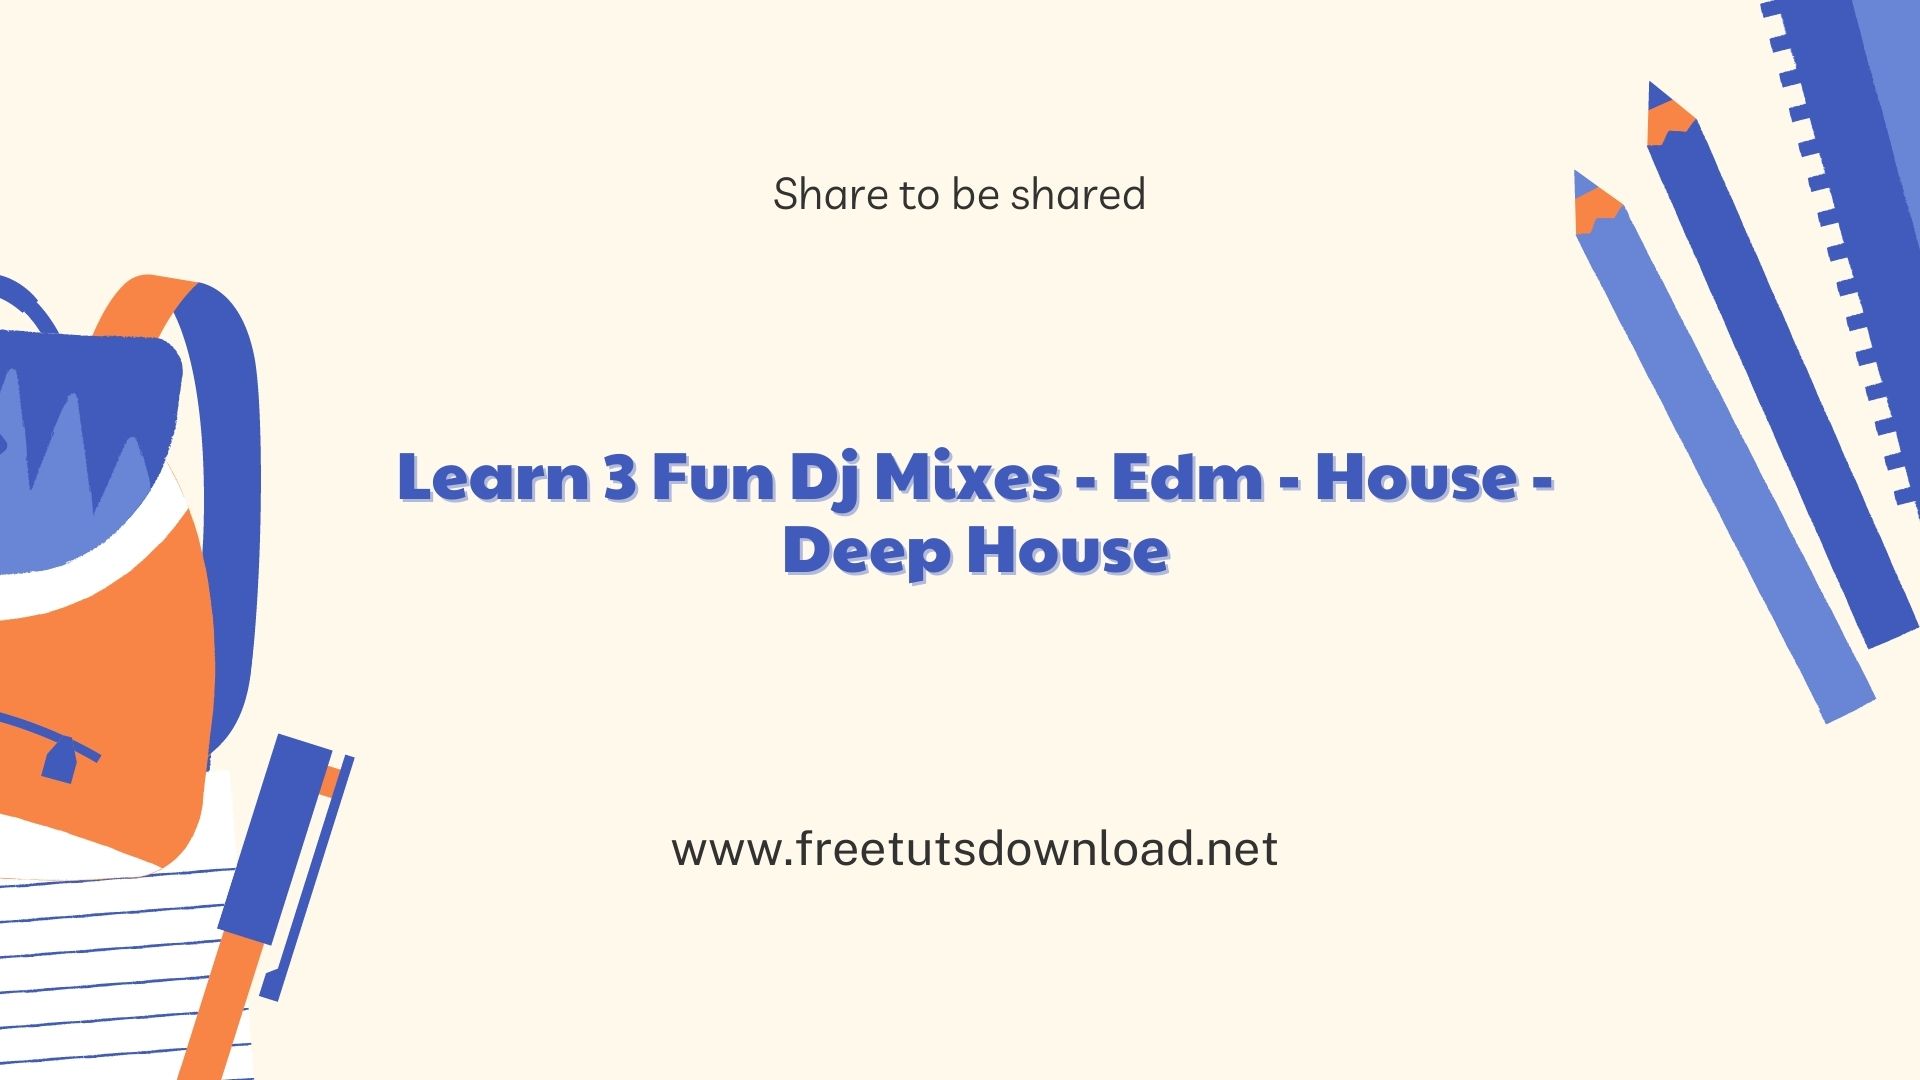 Learn 3 Fun Dj Mixes - Edm - House - Deep House